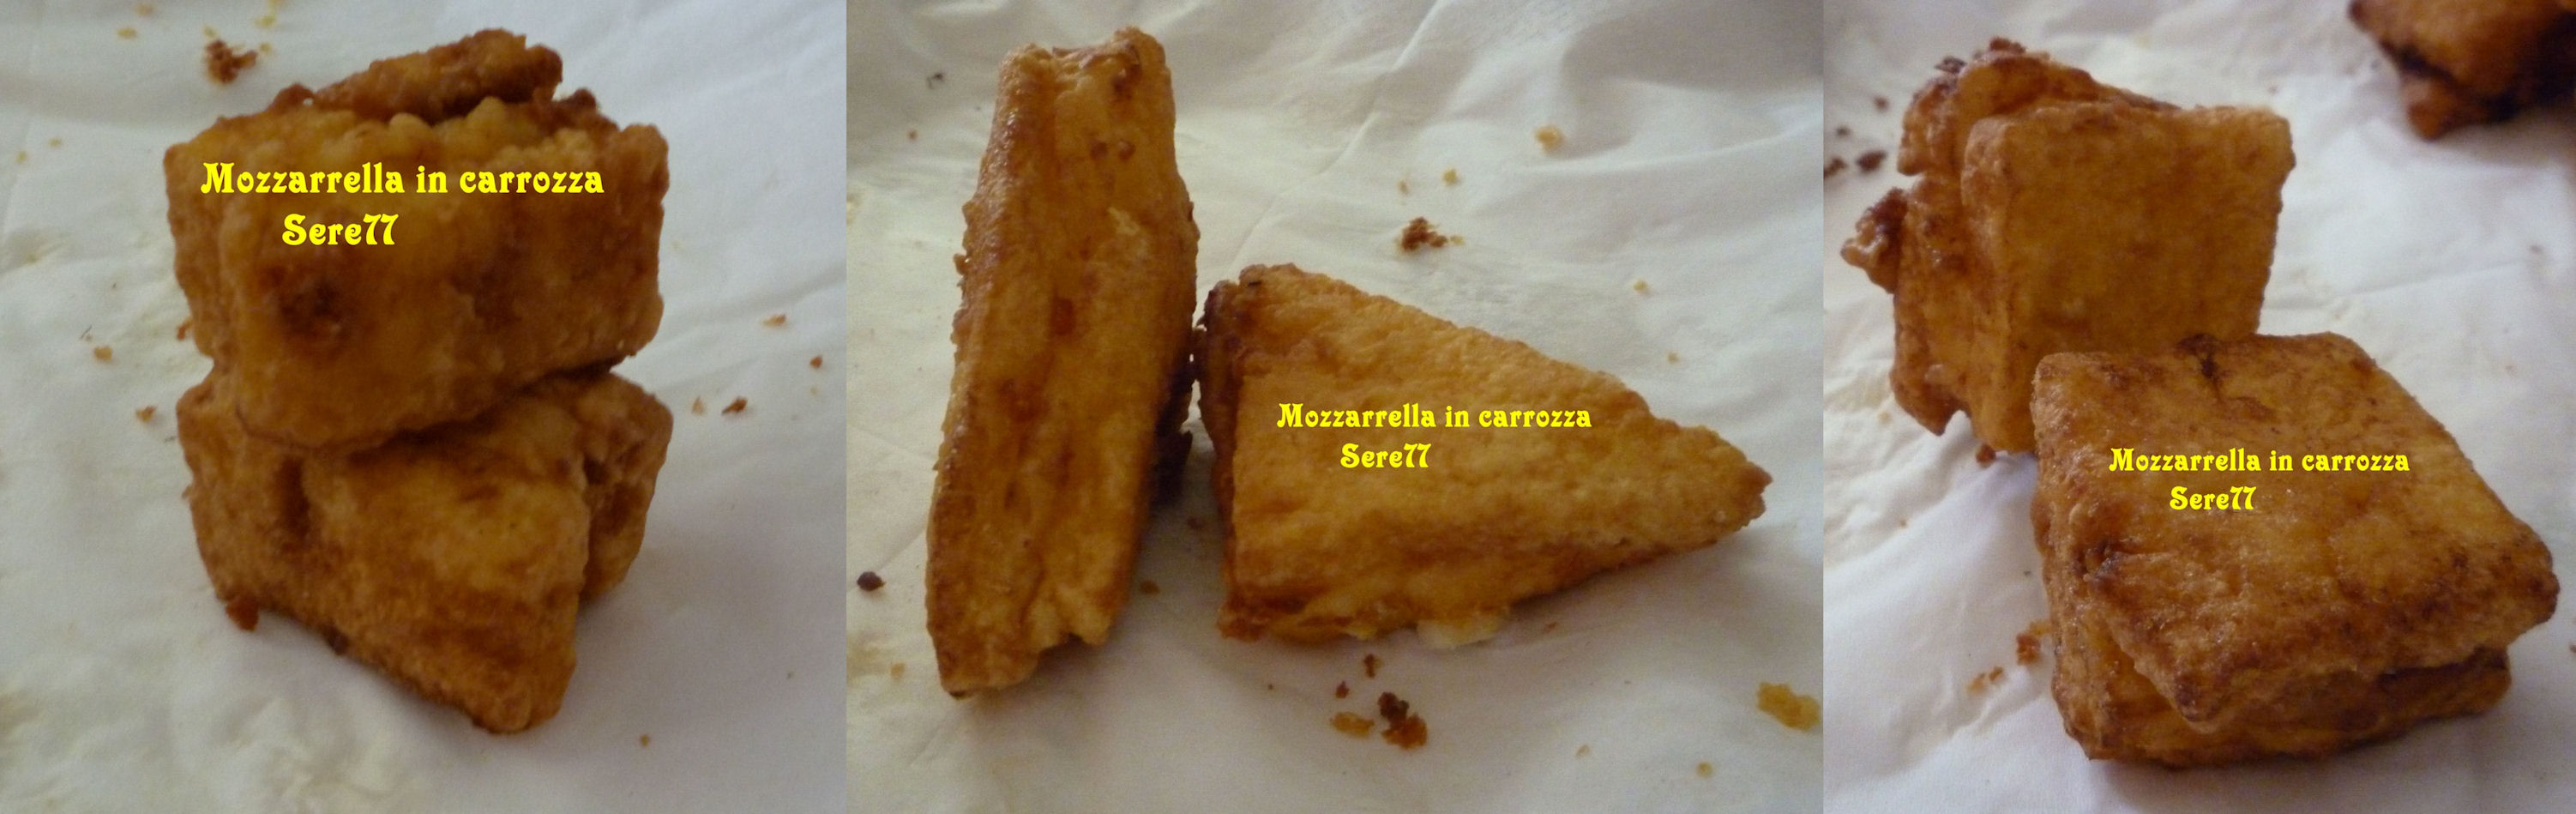 mozzarella in carrozza (1)-horz.jpg